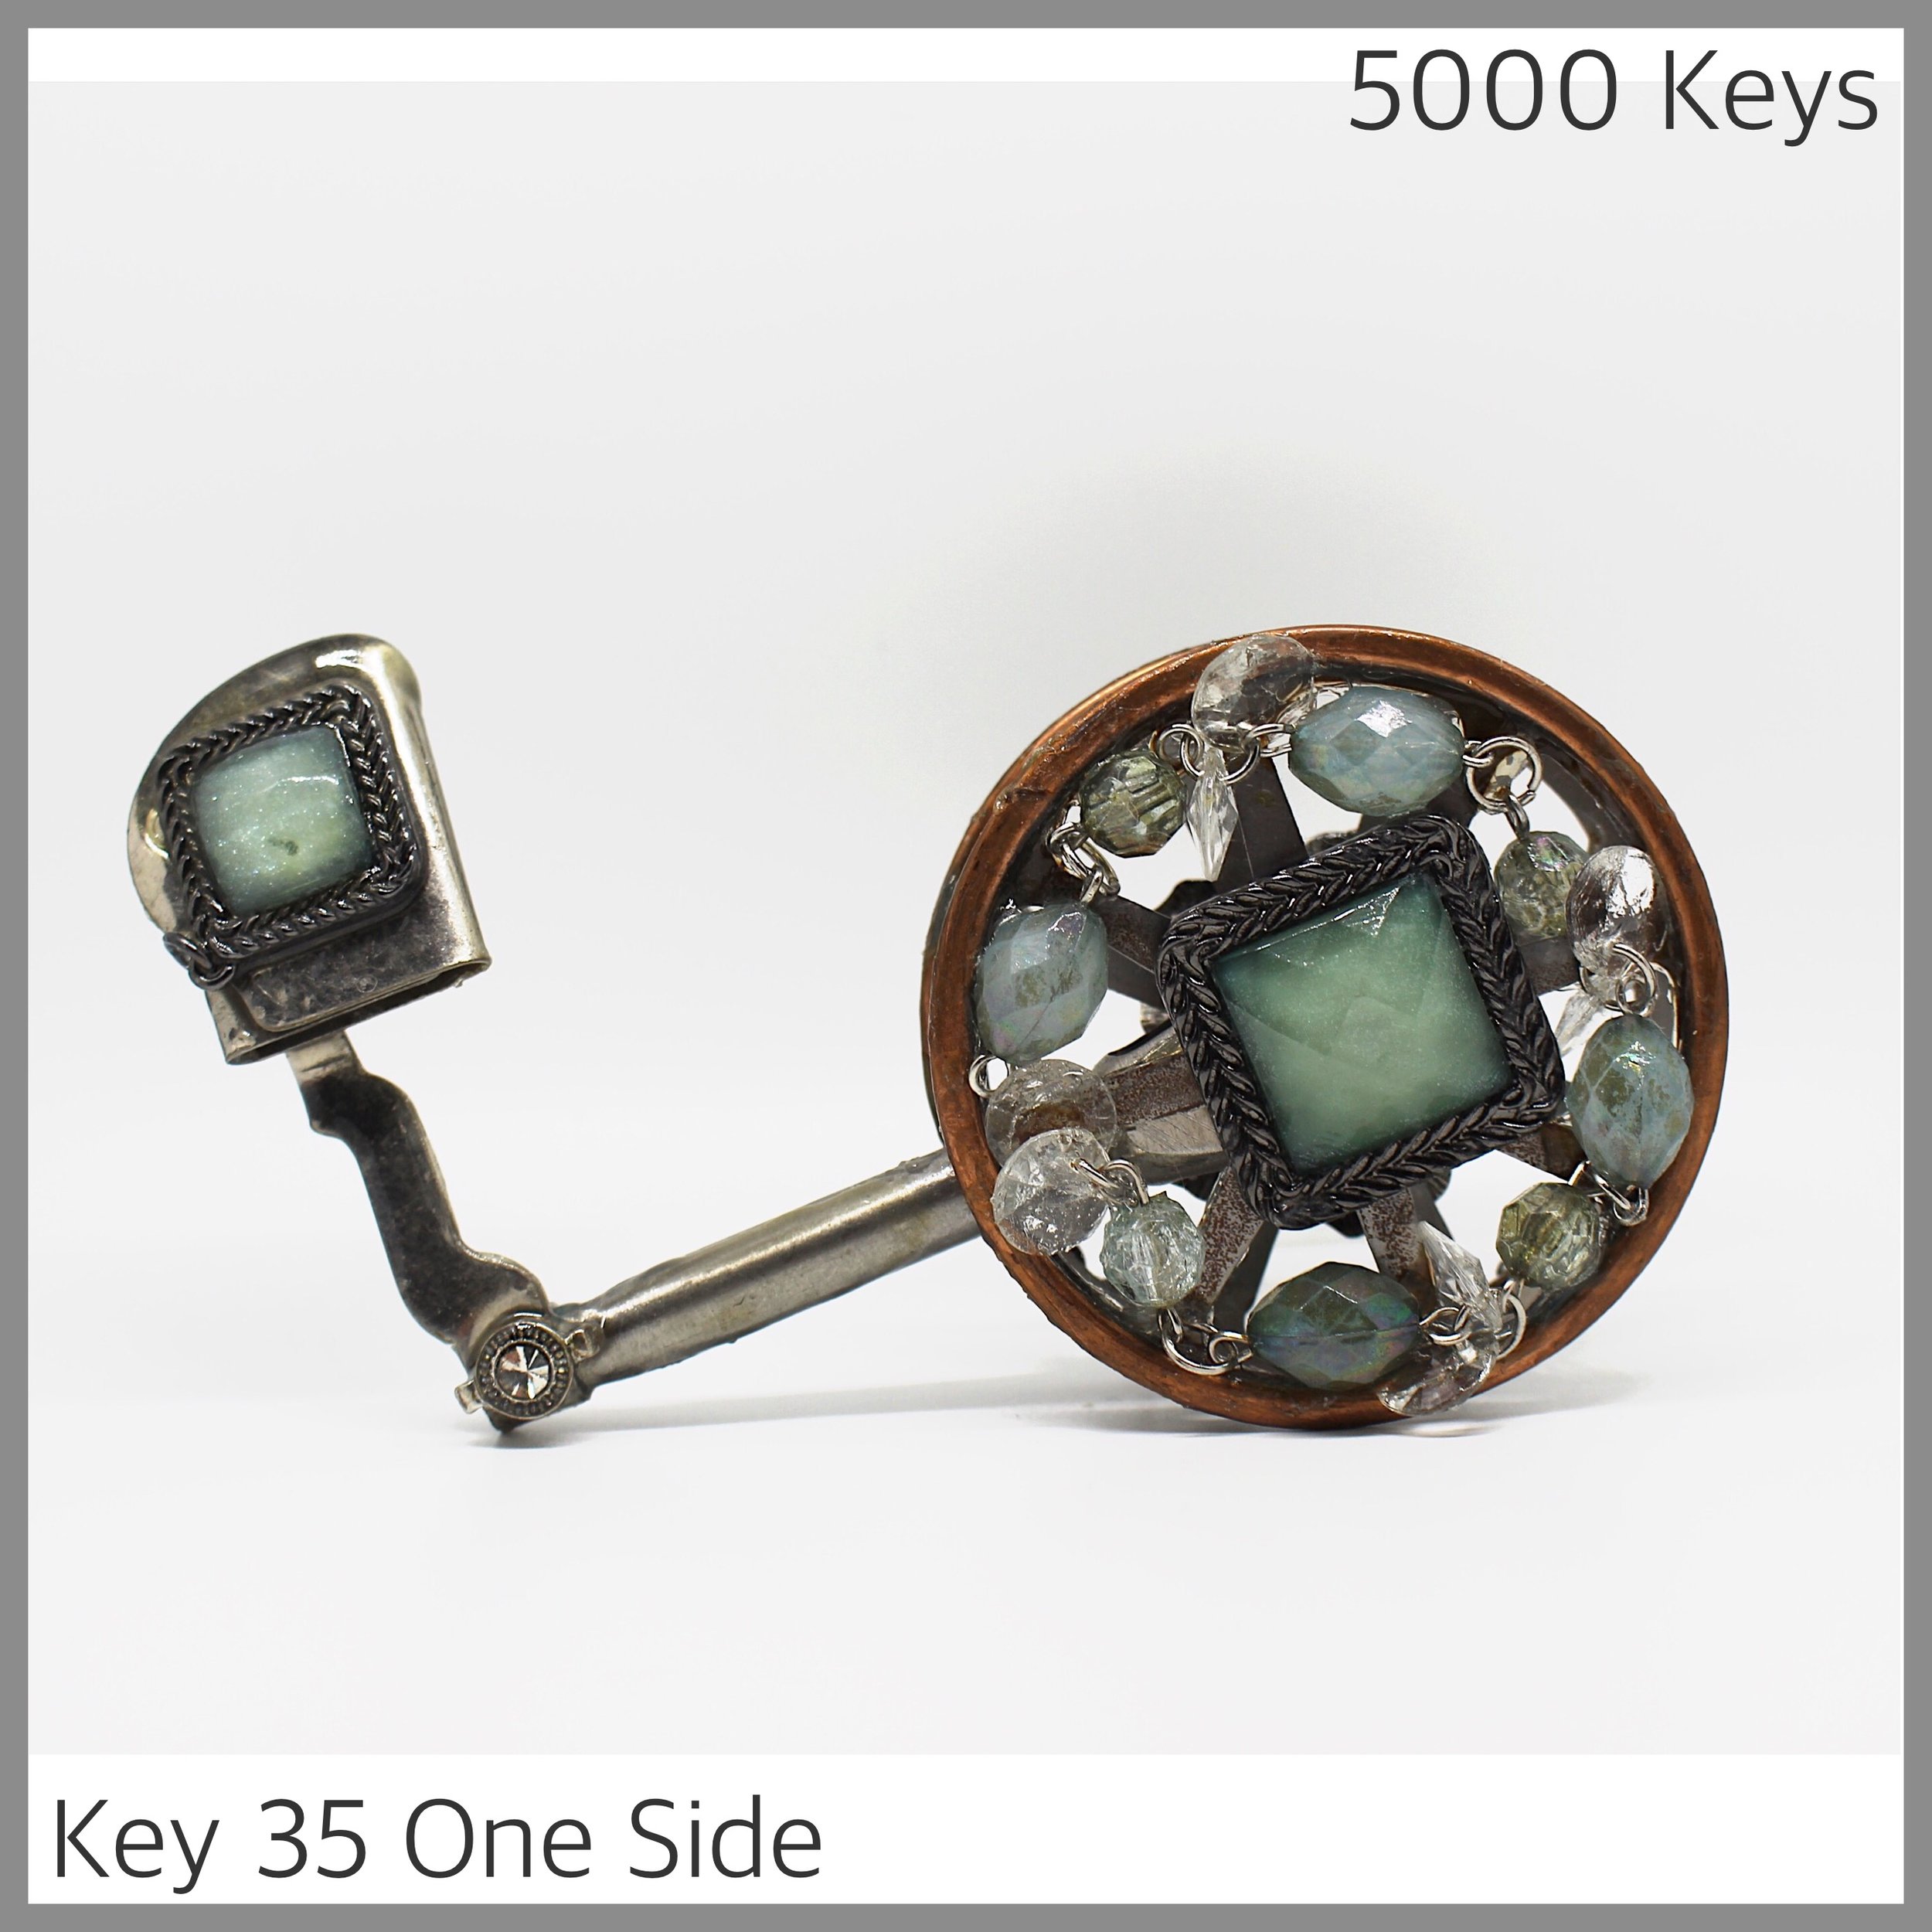 Key 35 one side.JPG